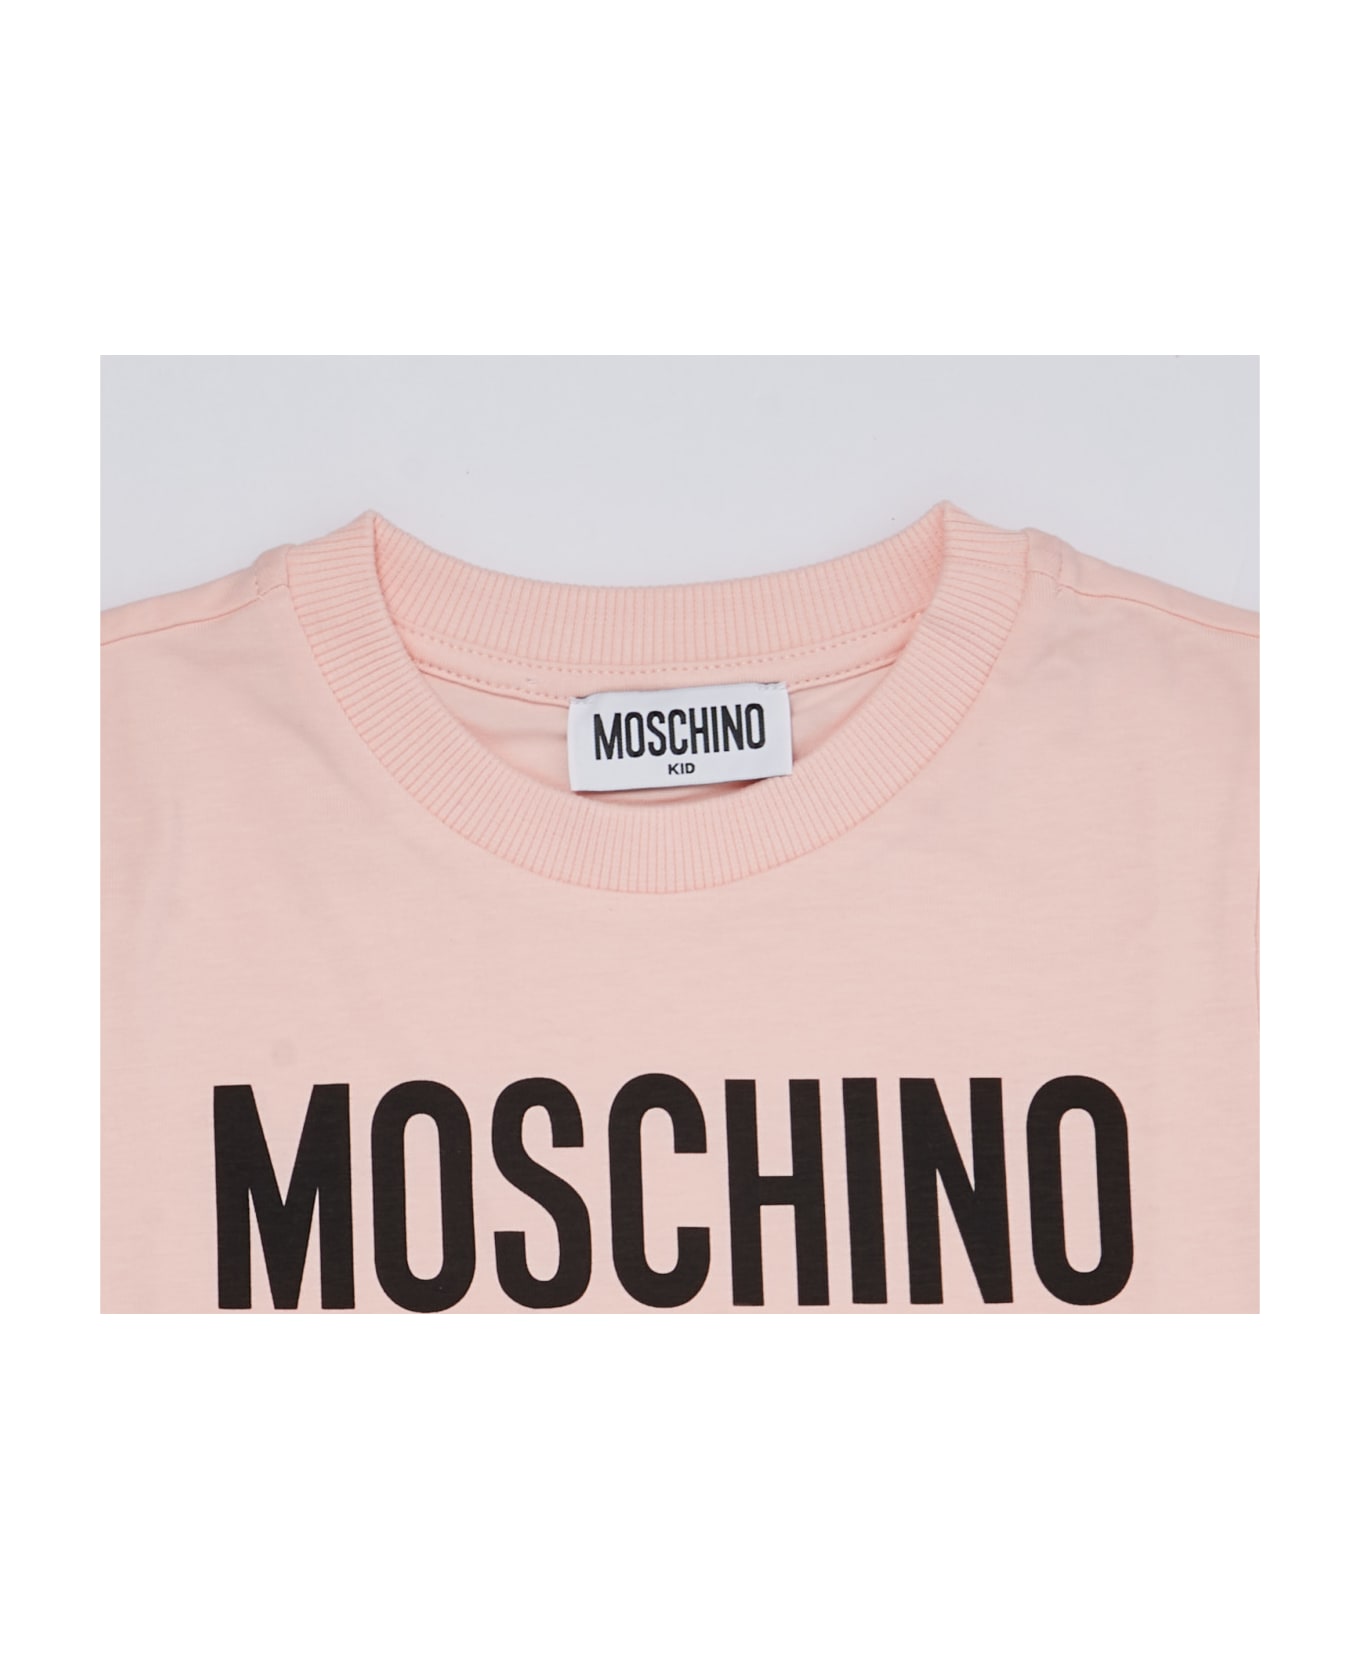 Moschino T-shirt T-shirt - ROSA